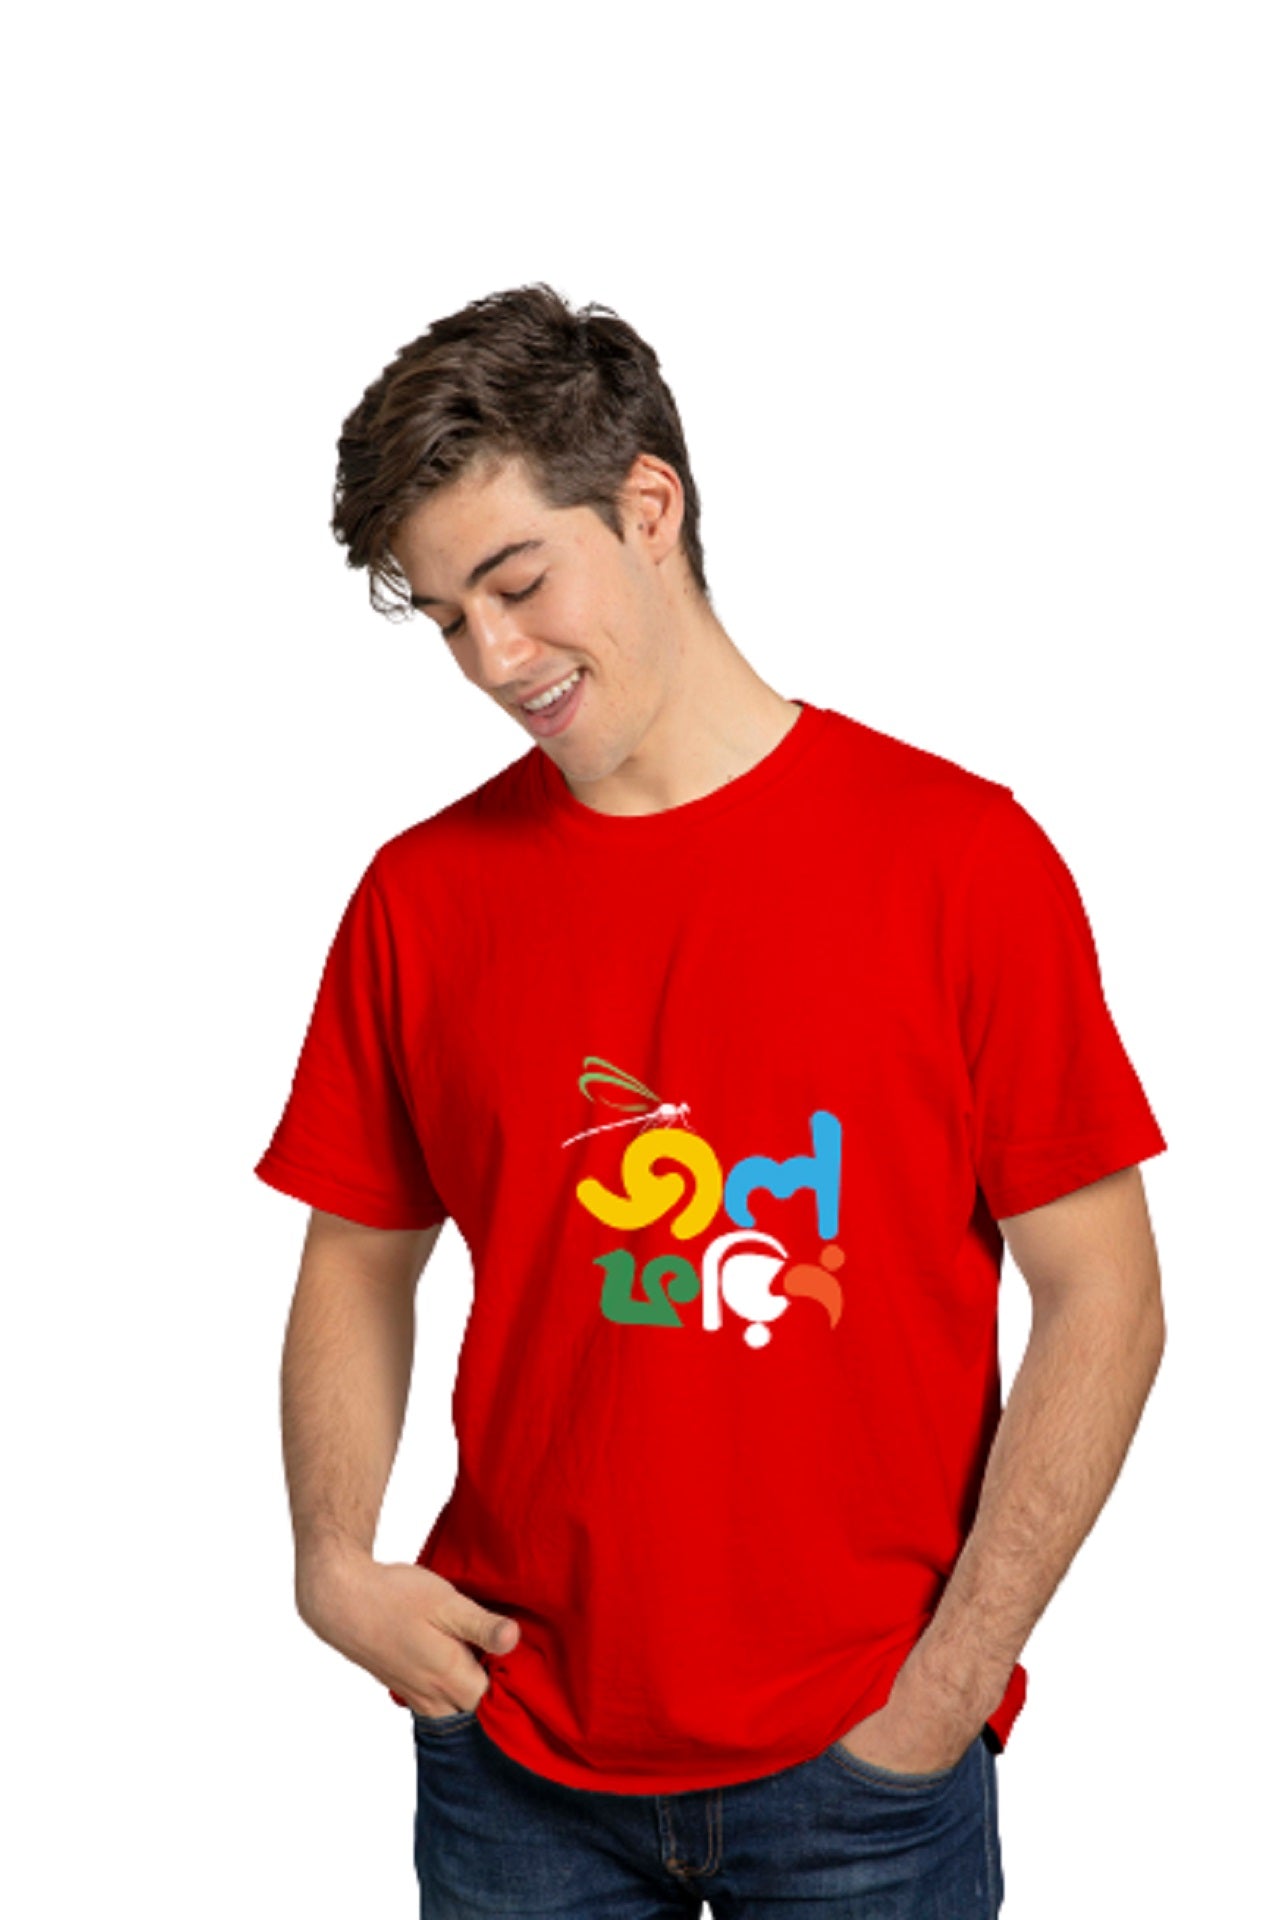 Mens Designer T shirts Online in India